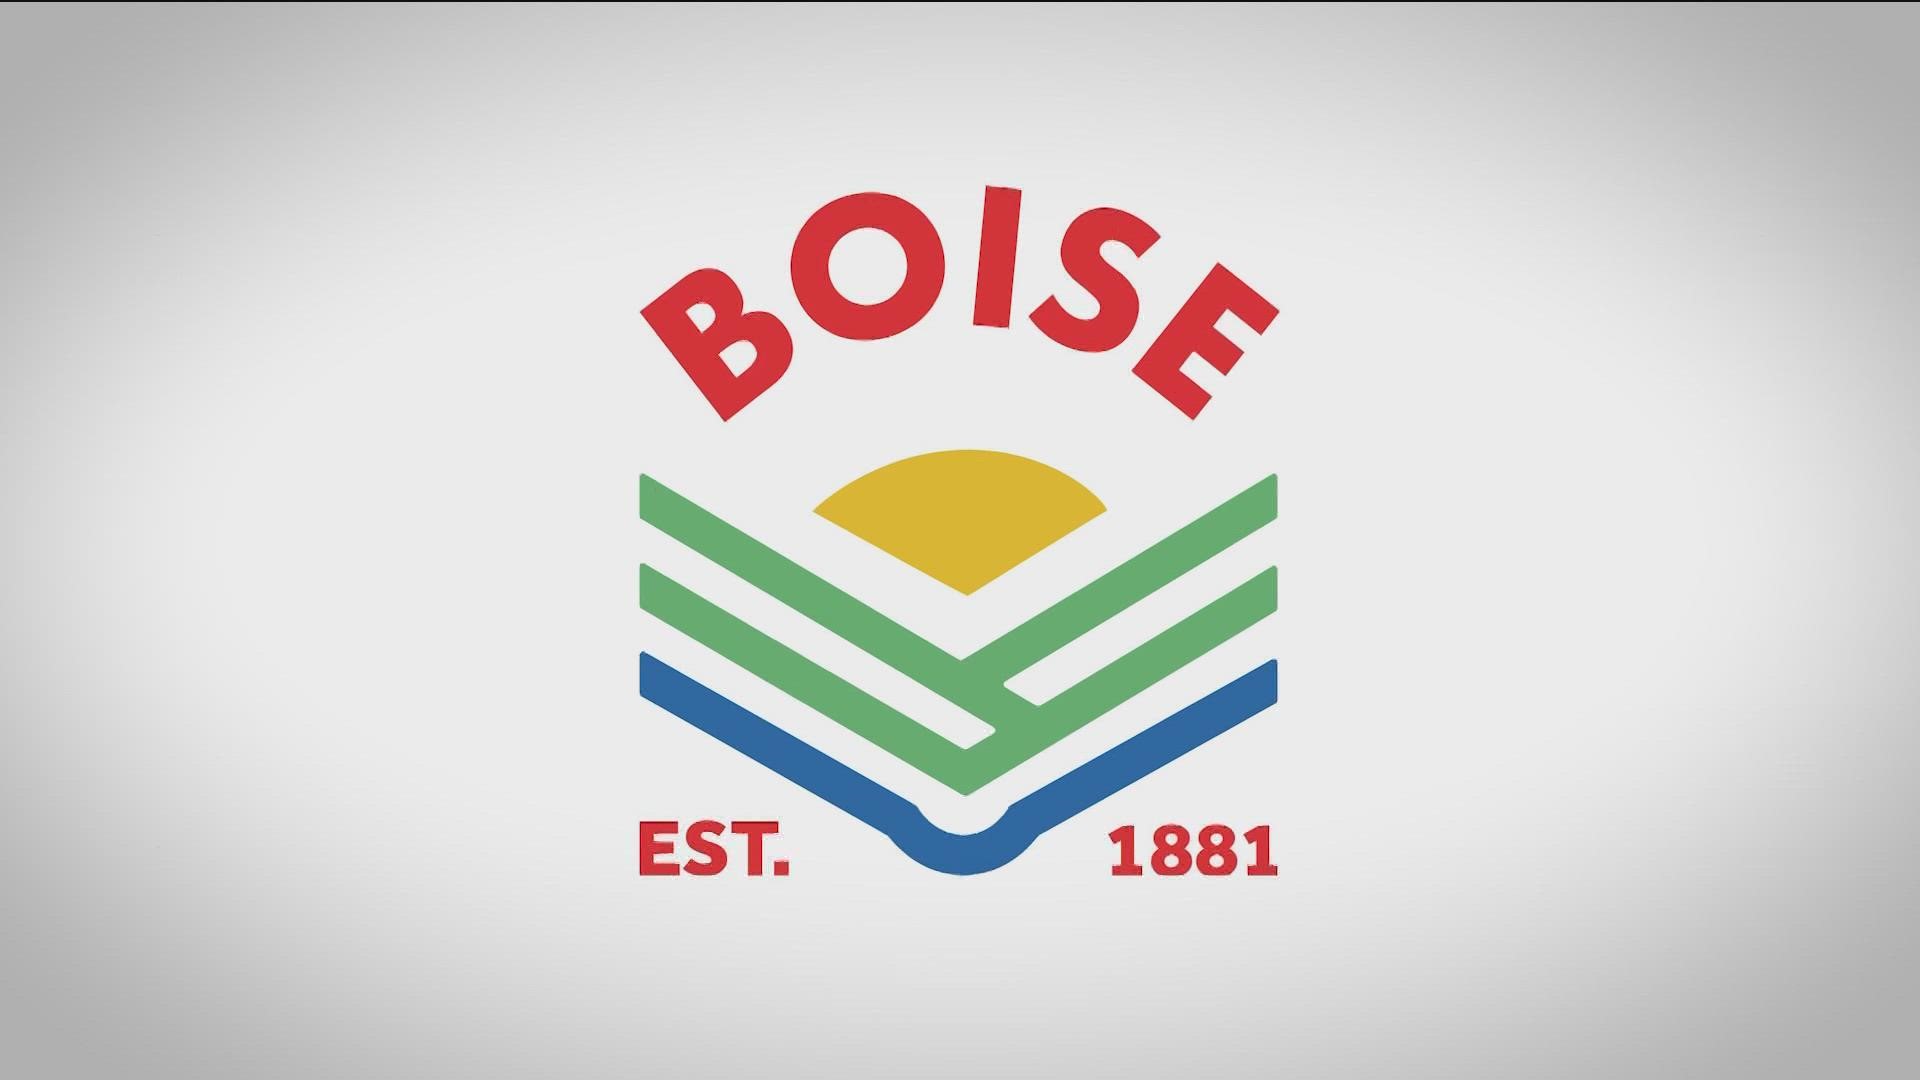 boise state new logo